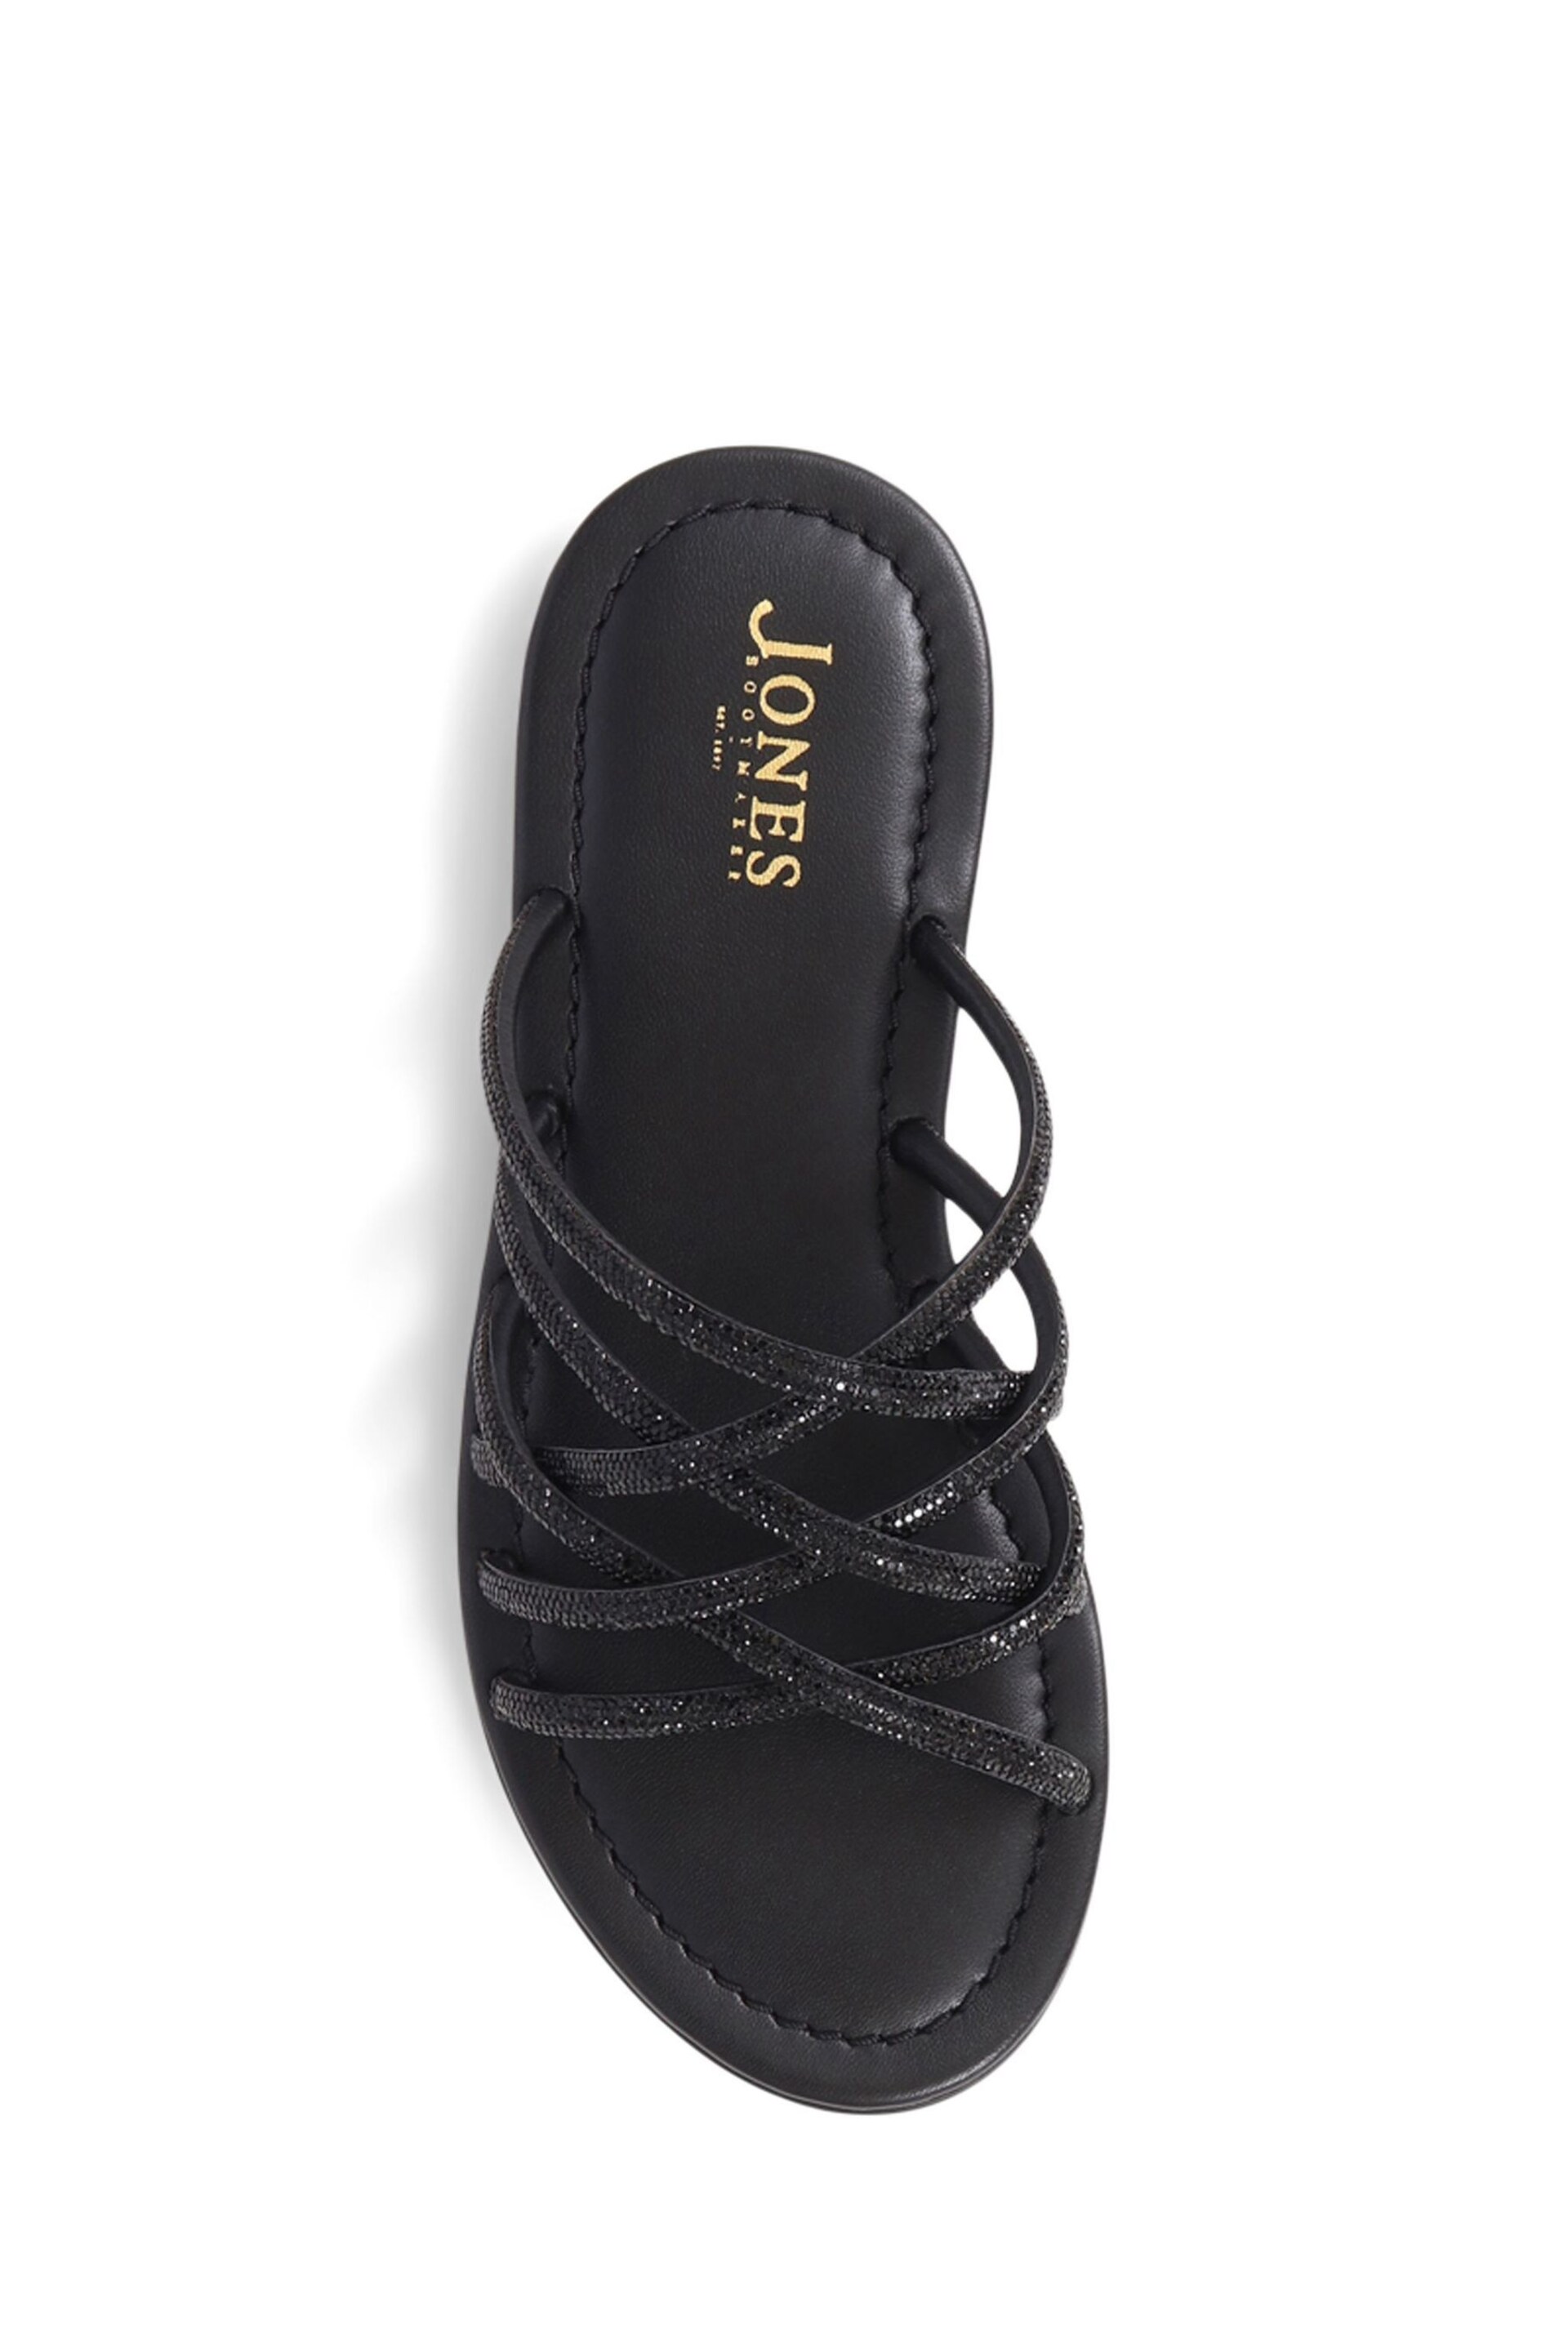 Jones Bootmaker Hira Jewelled Leather Black Sandals - Image 4 of 5